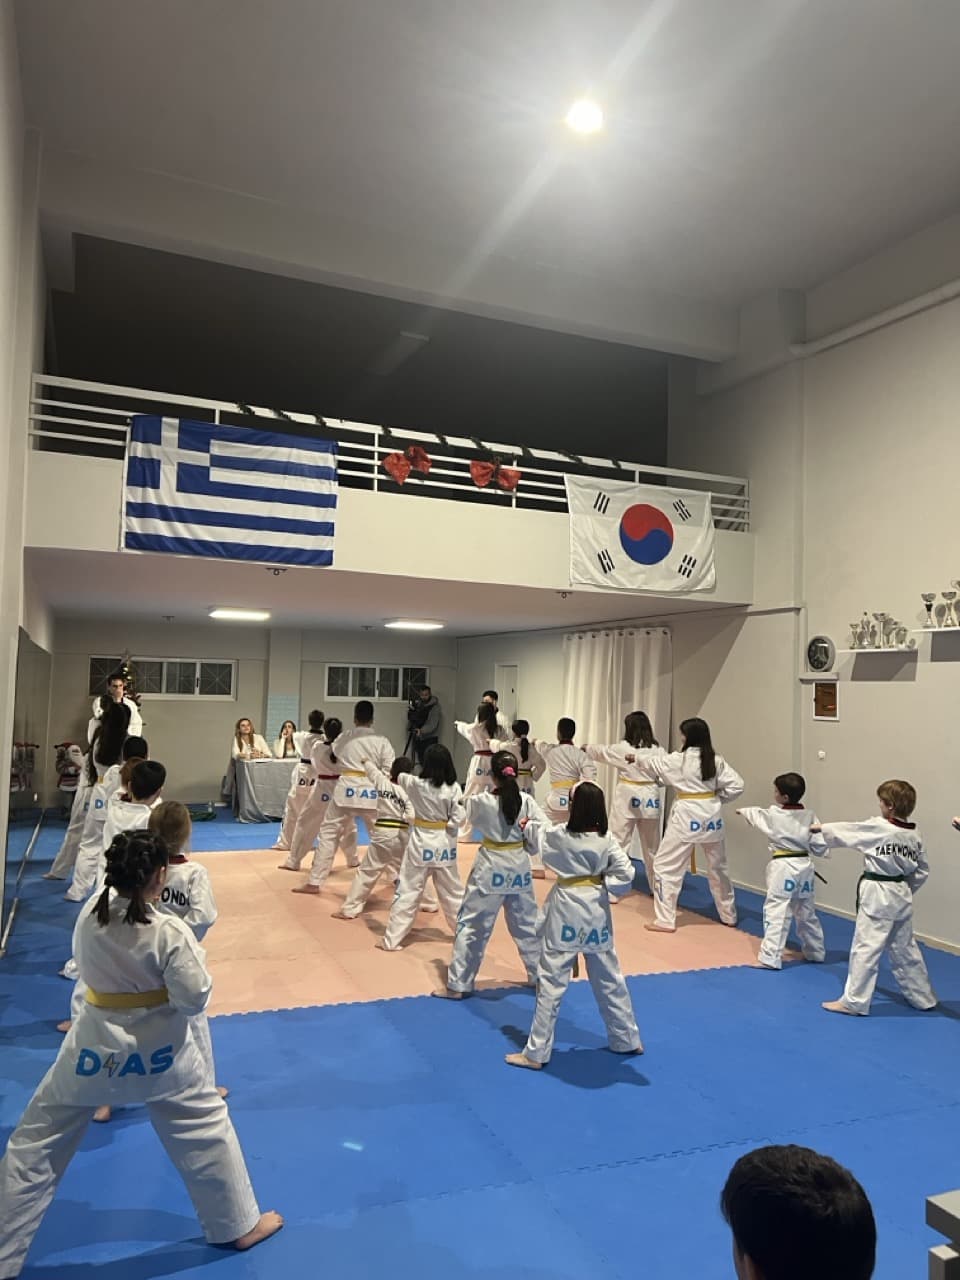 dias-kalamatas-taekwondo-sportshunter13